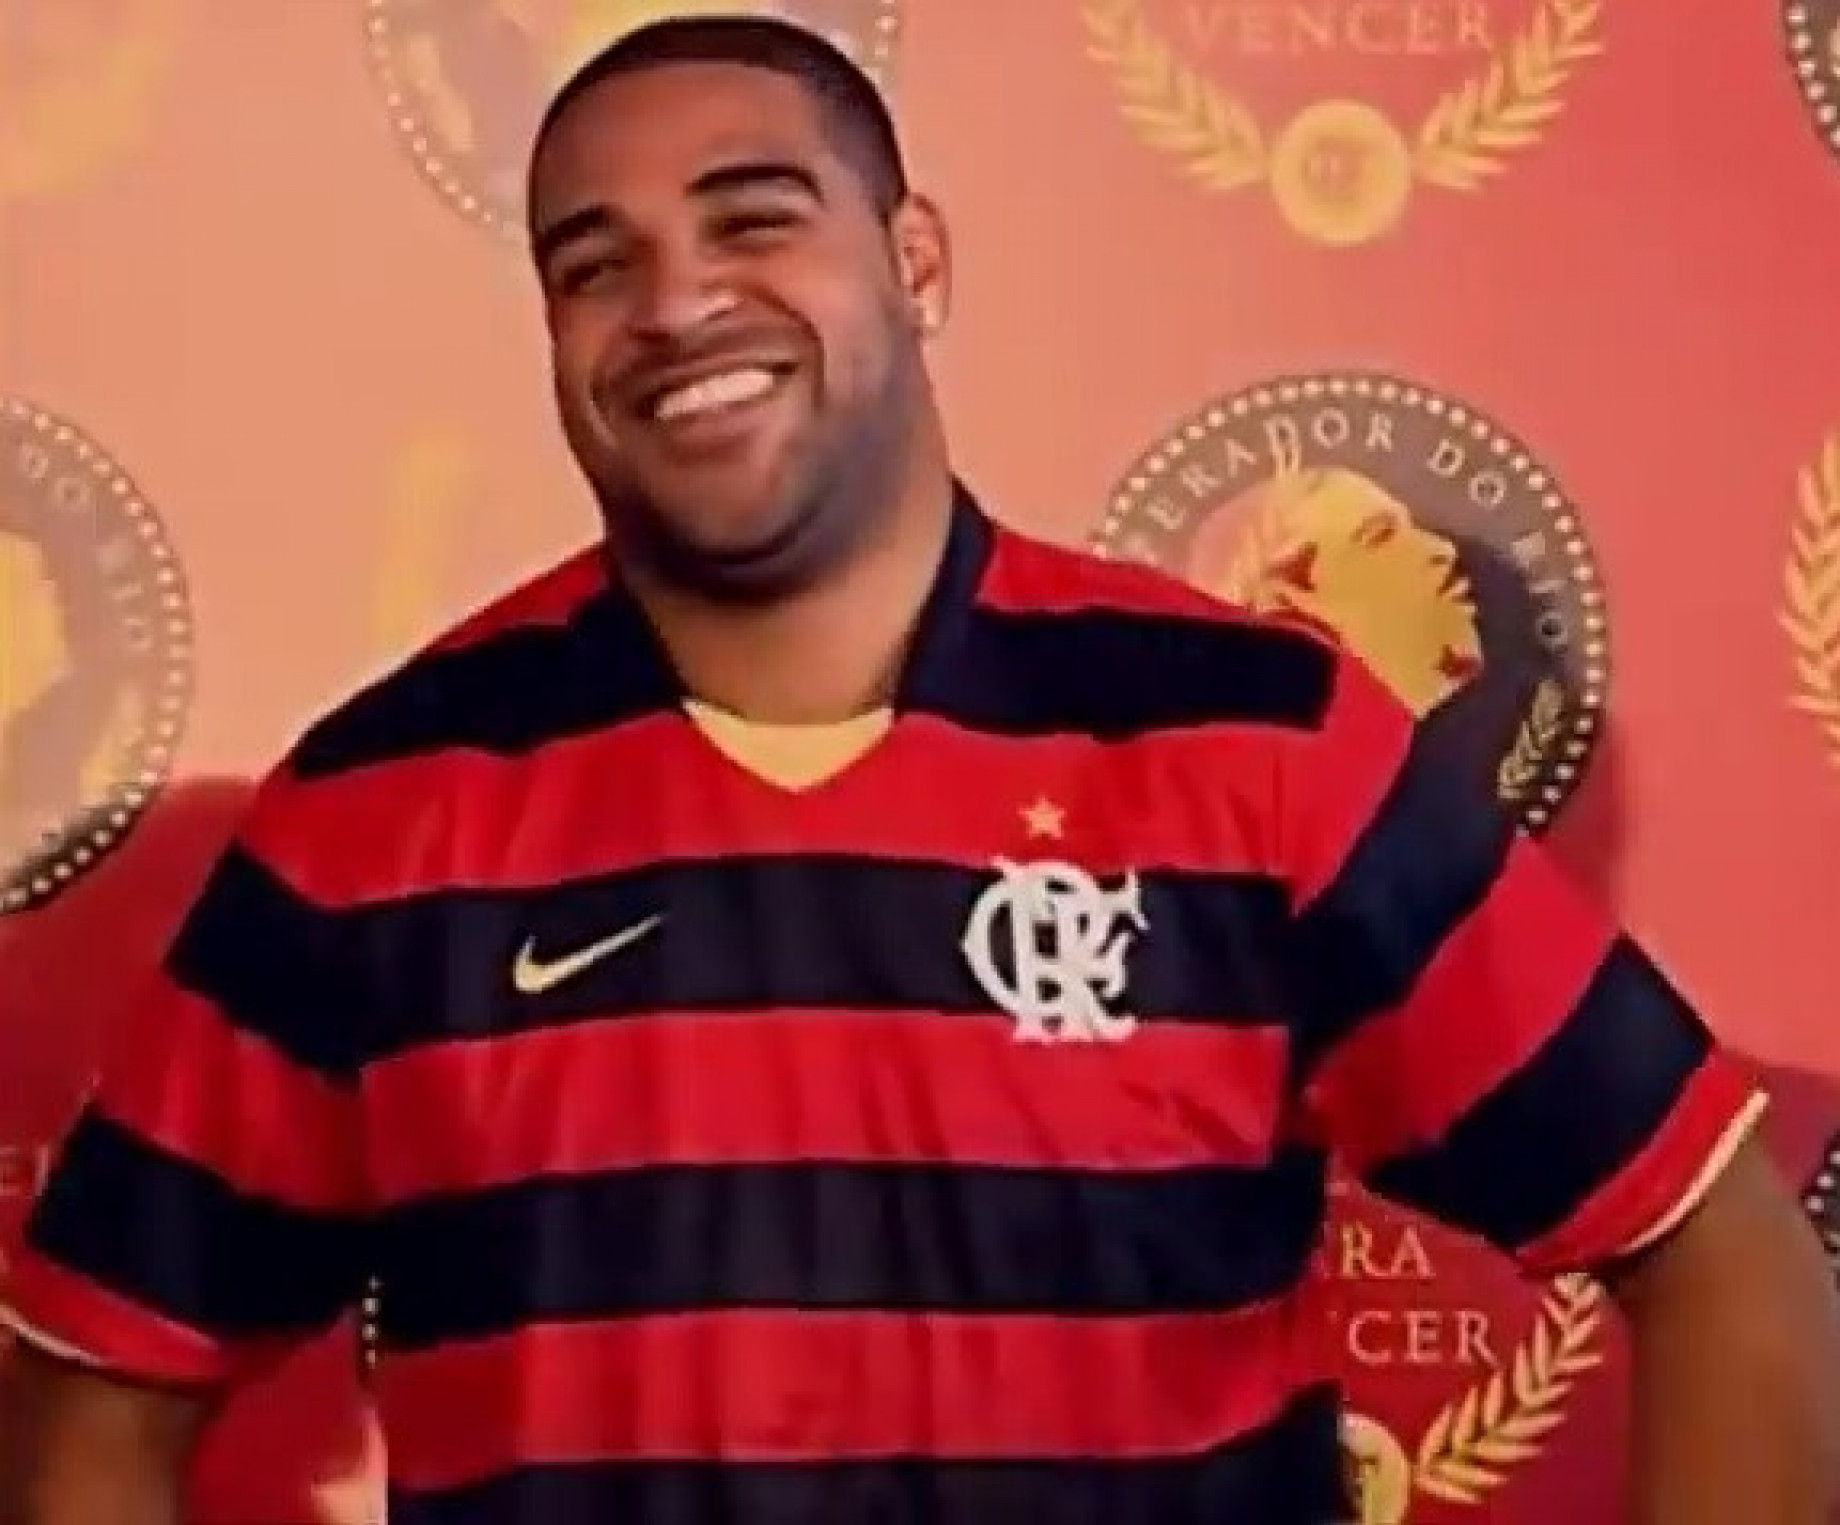 Adriano_Flamengo_screen.jpg